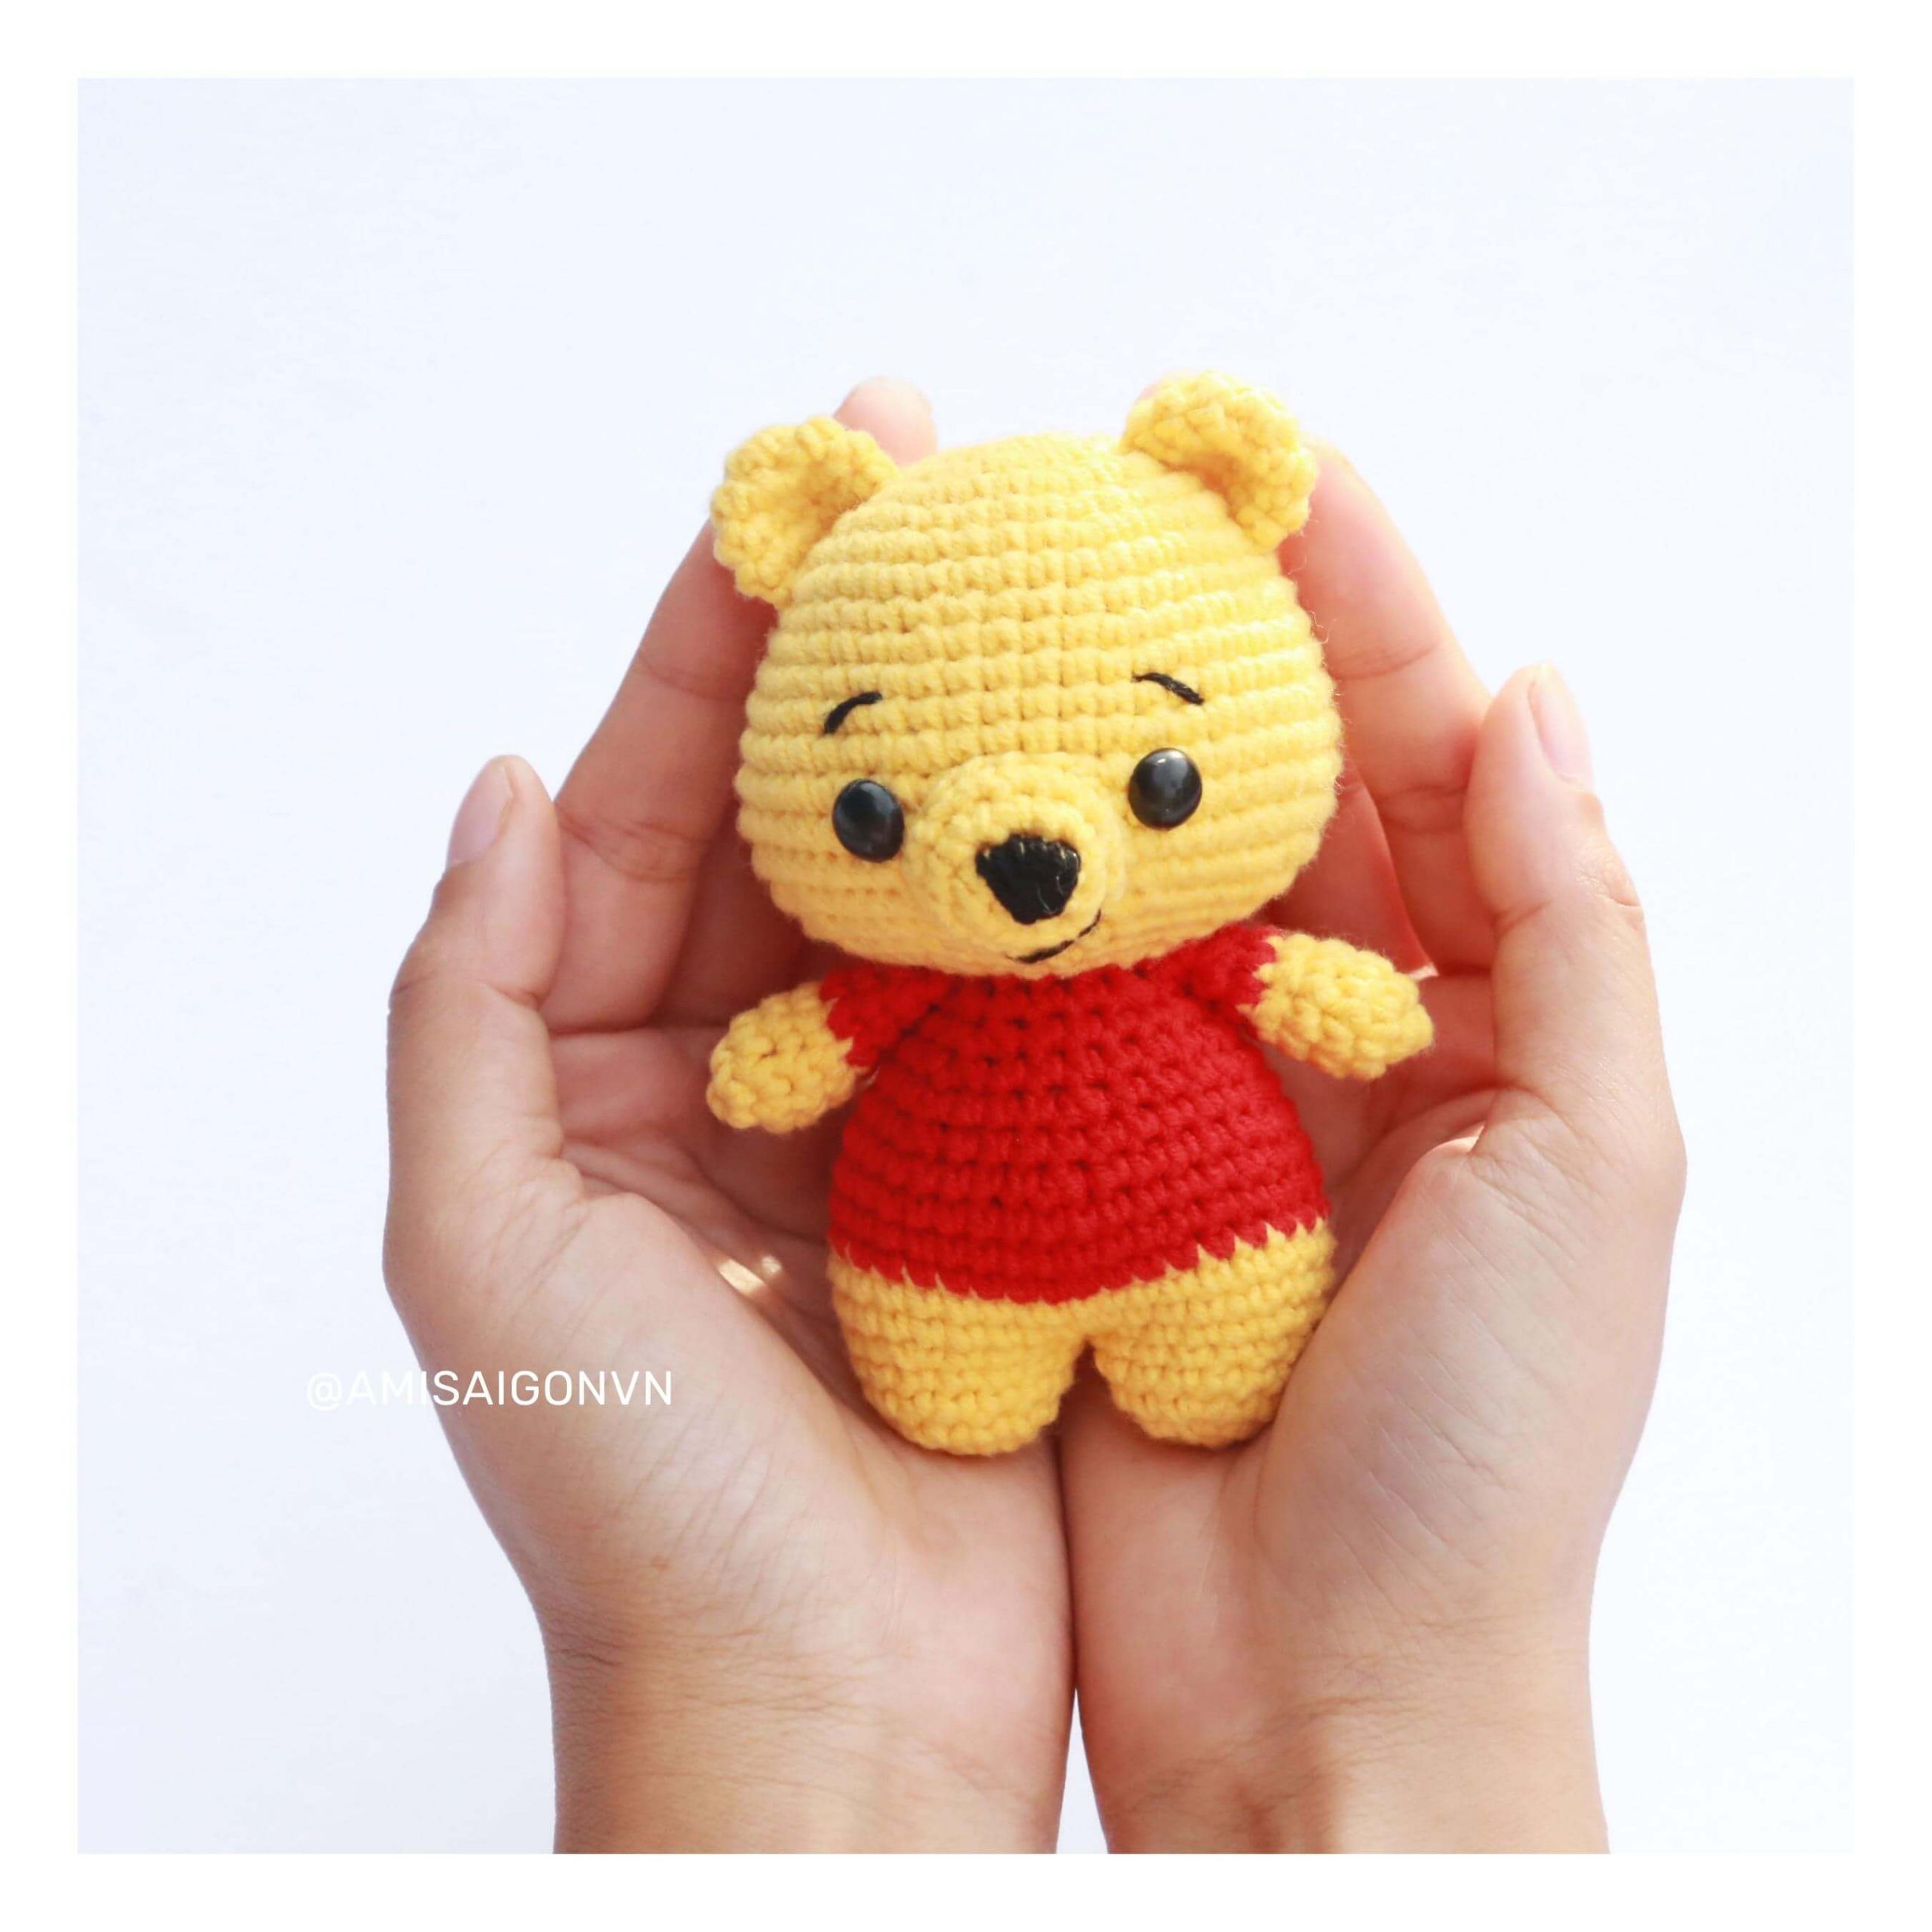 pooh-amigurumi-crochet-pattern-amisaigon (3)